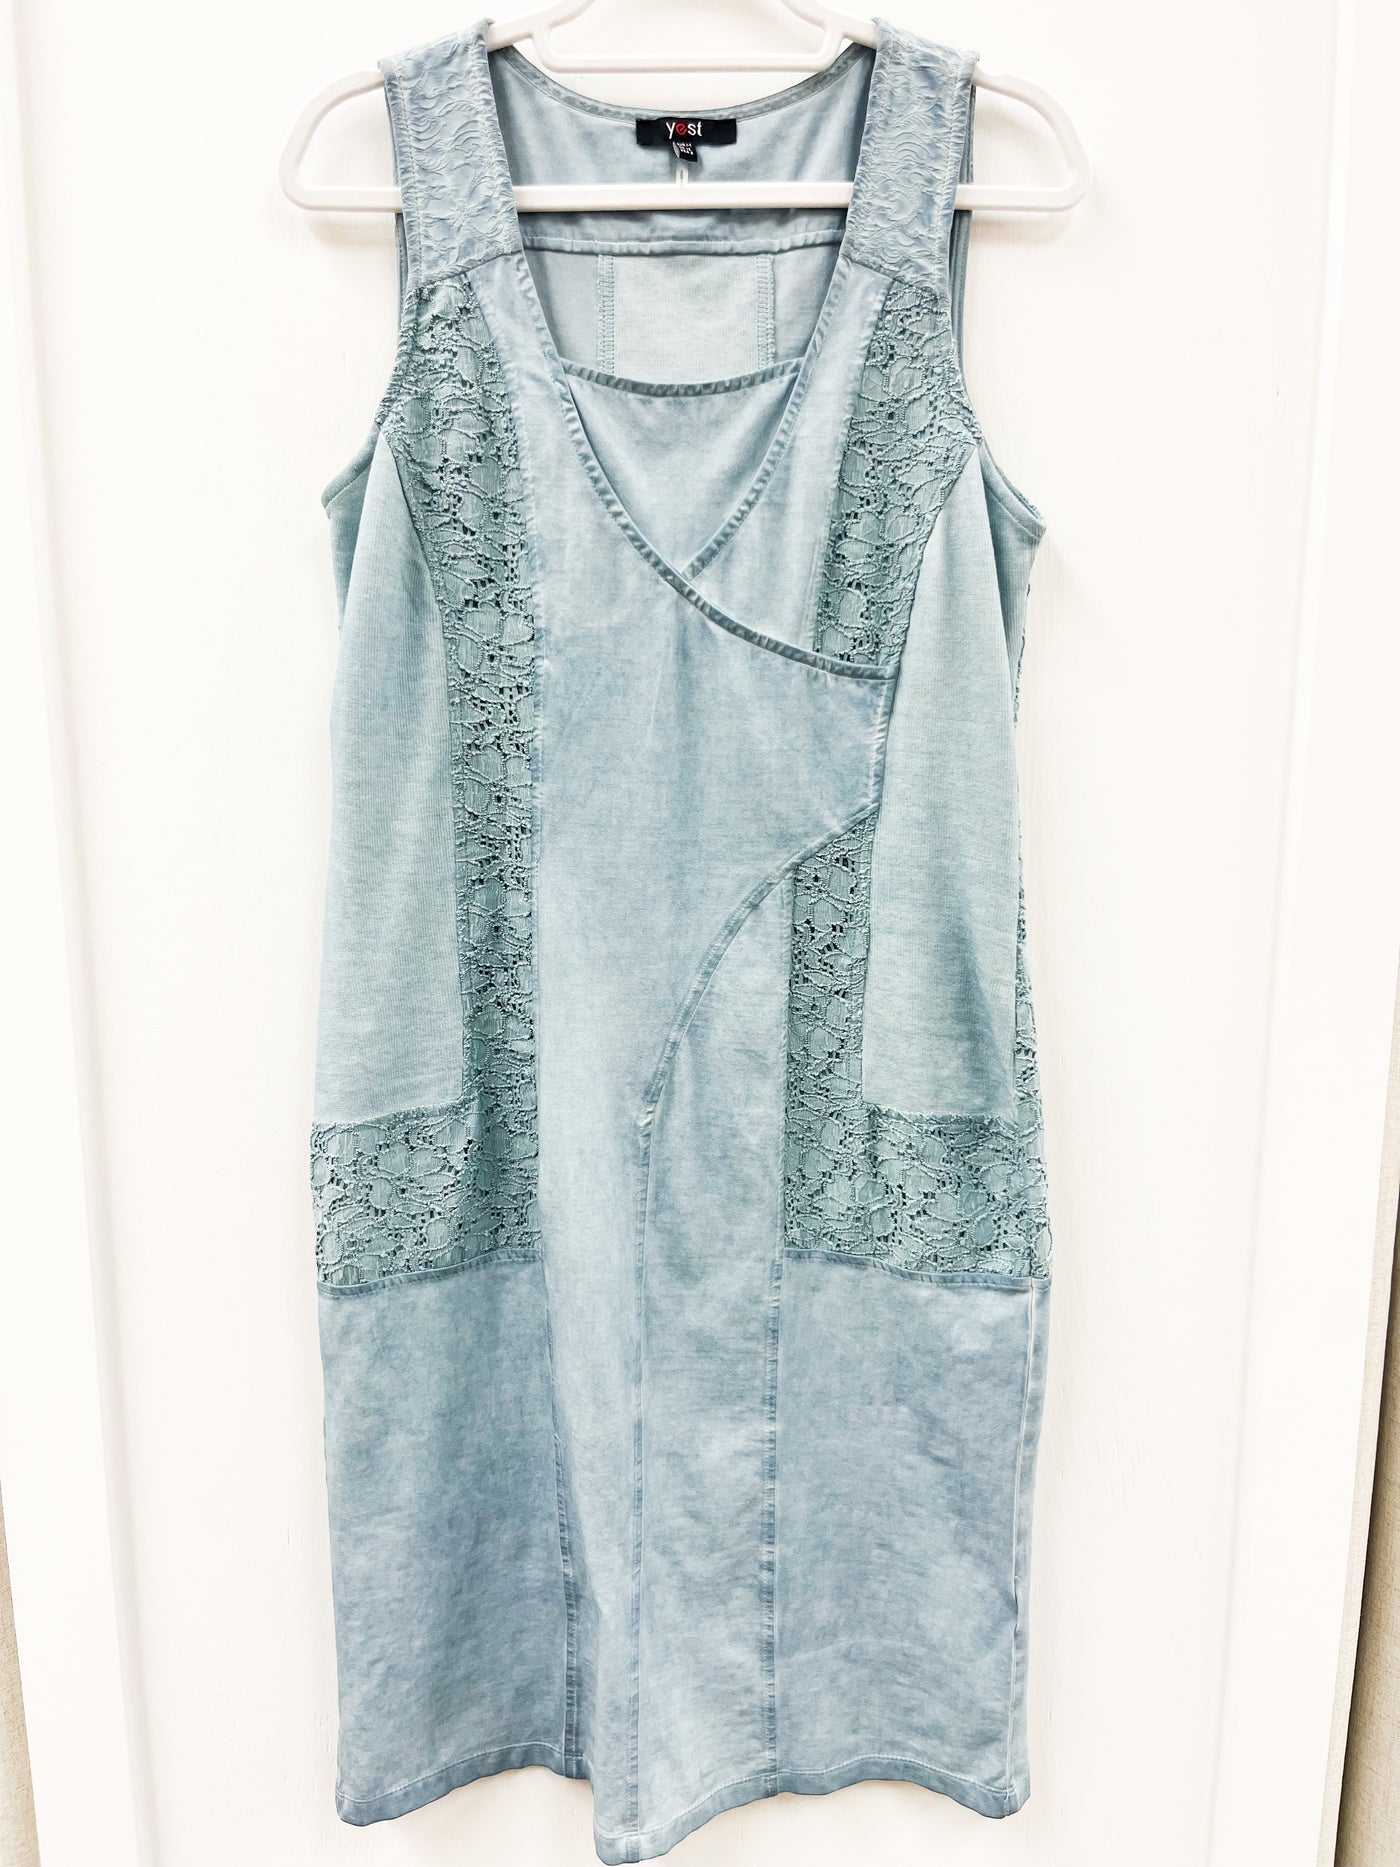 YEST blue cotton dress